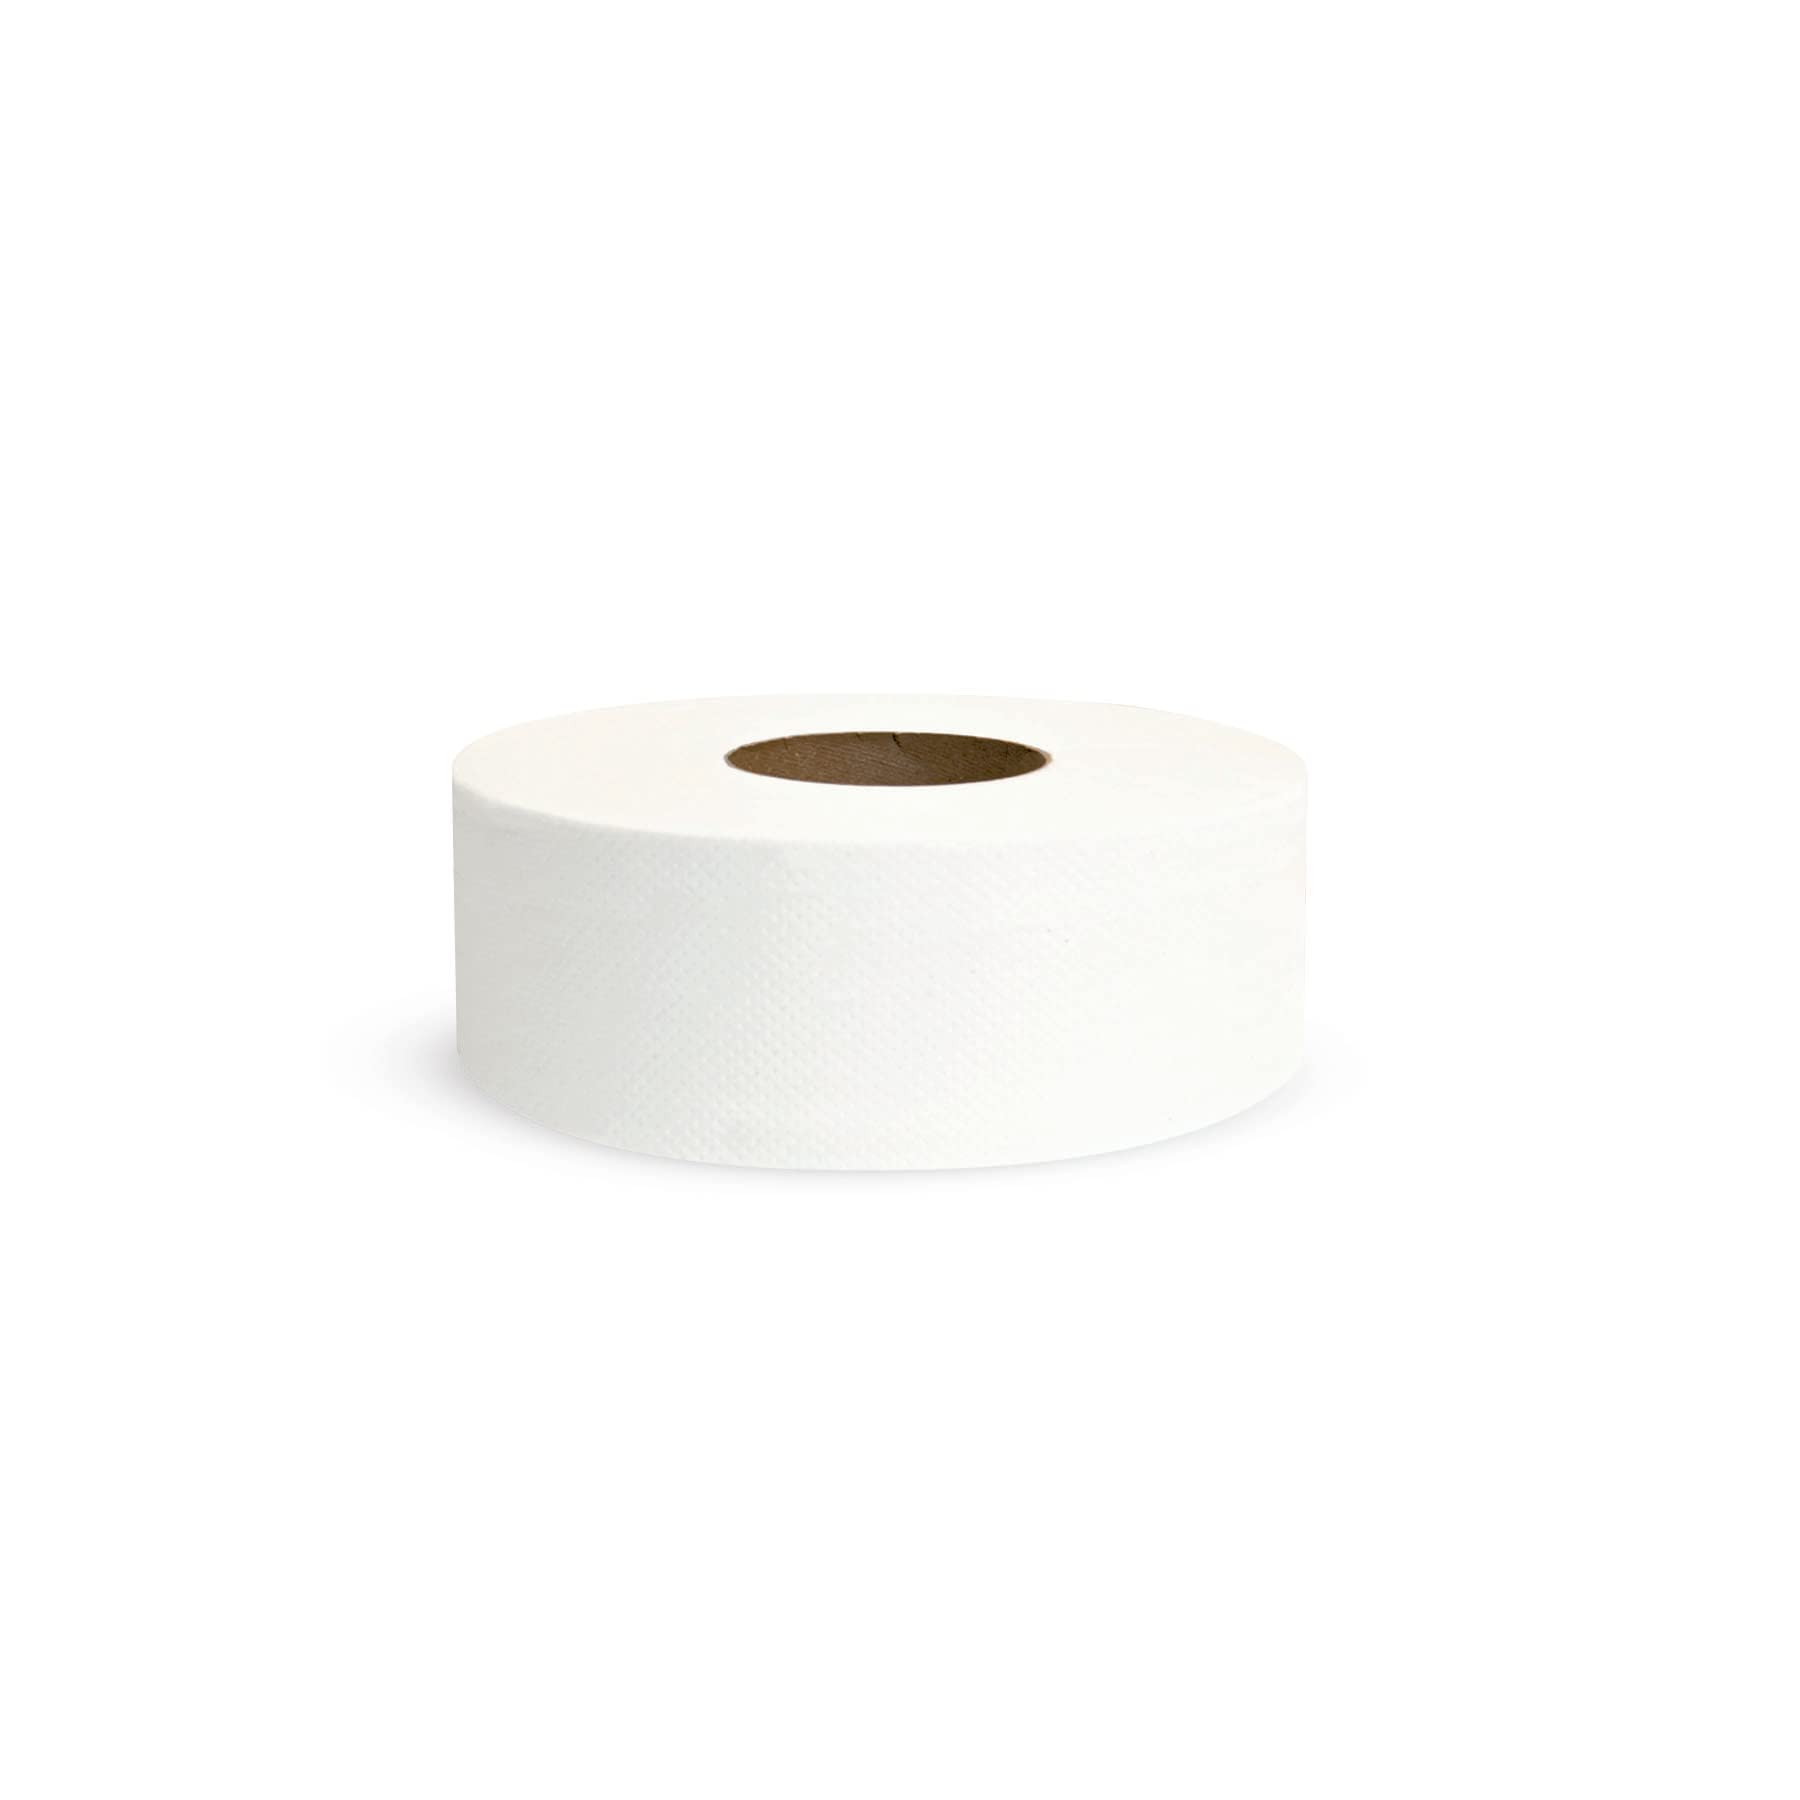 Morcon Paper 29 Millennium Bath Tissue, 2-Ply, White